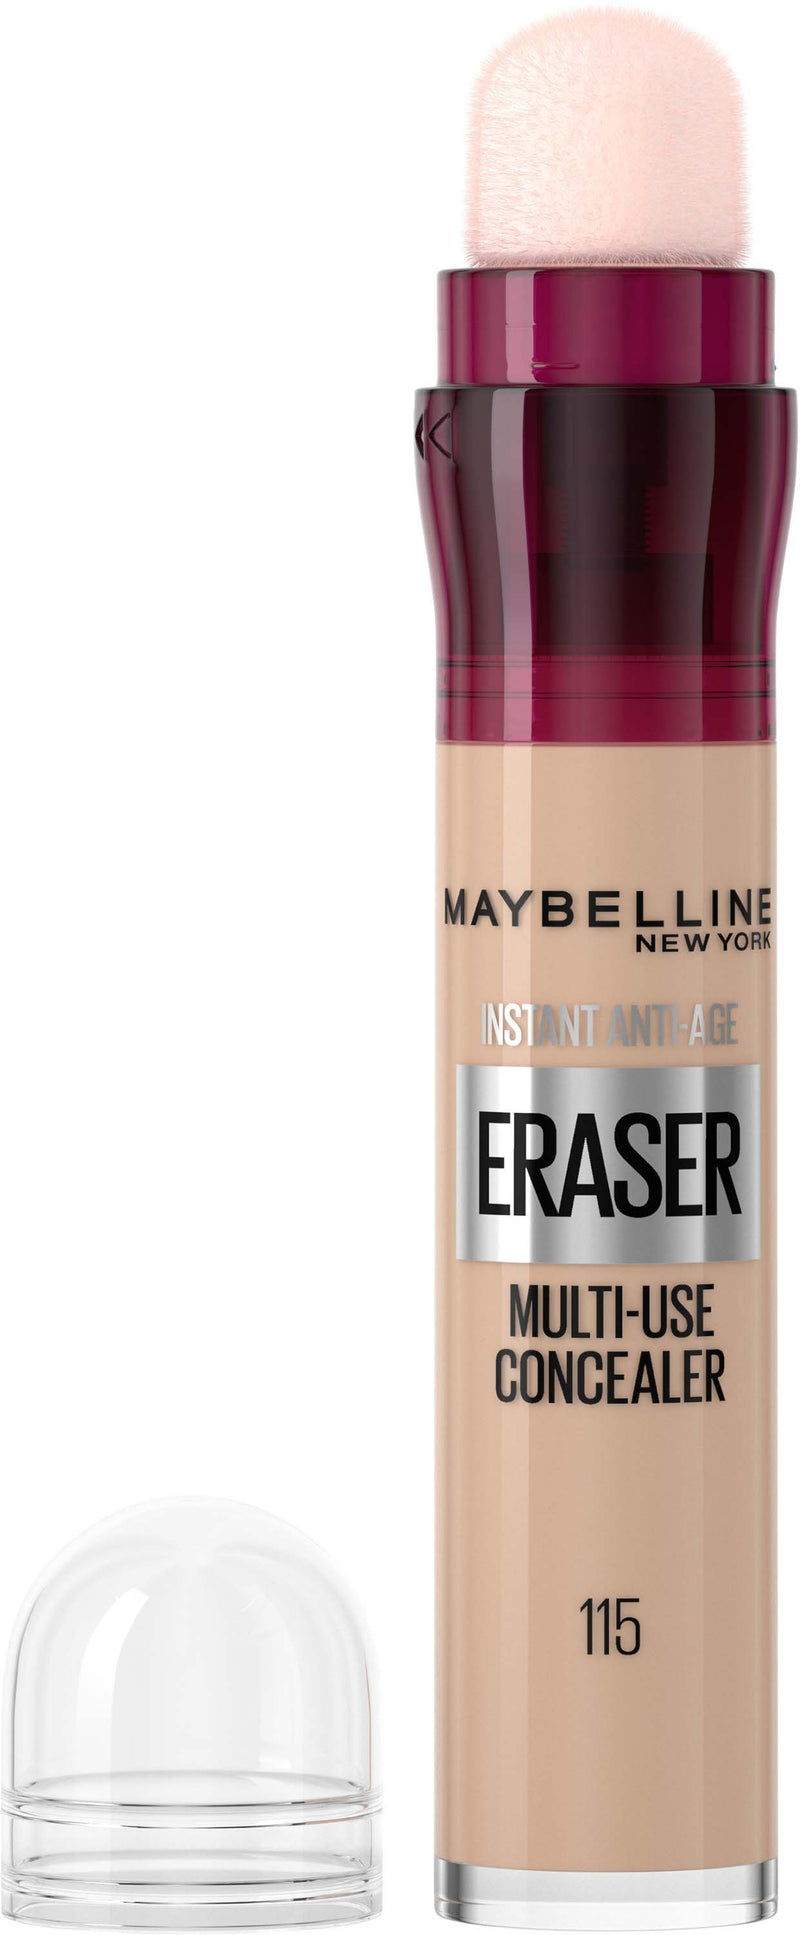 Maybelline New York Instant Anti-Age Eraser Multi-Use Concealer 115 Warm Light